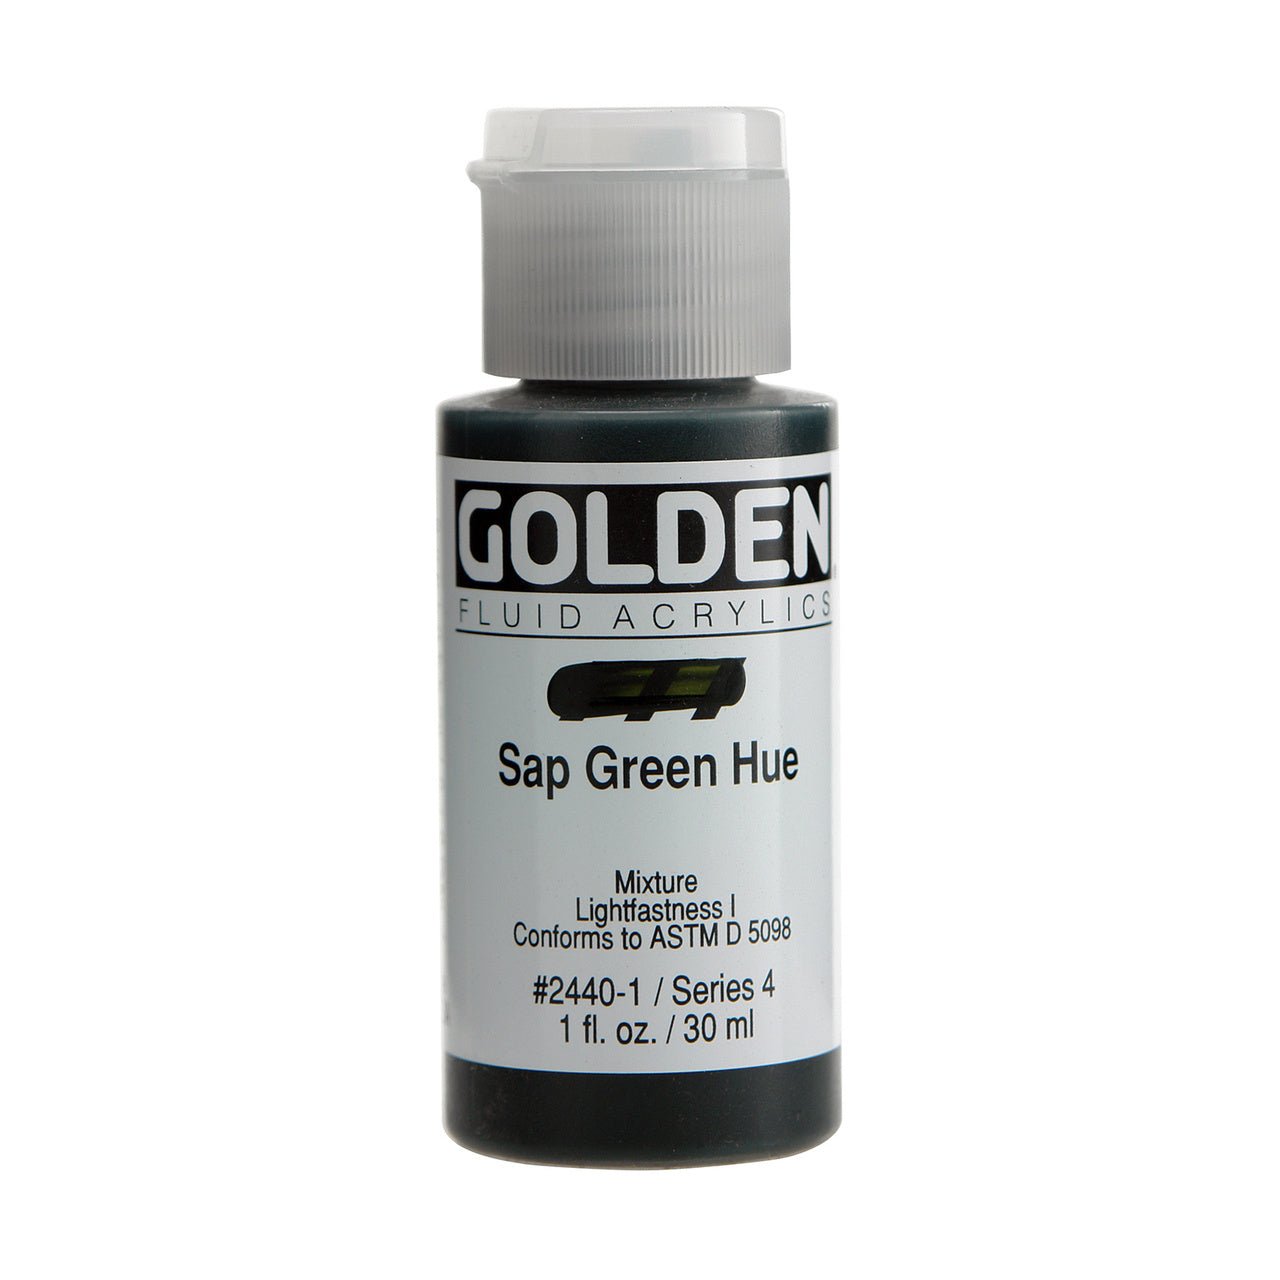 Golden Fluid Acrylic Sap Green Hue 1 oz - merriartist.com